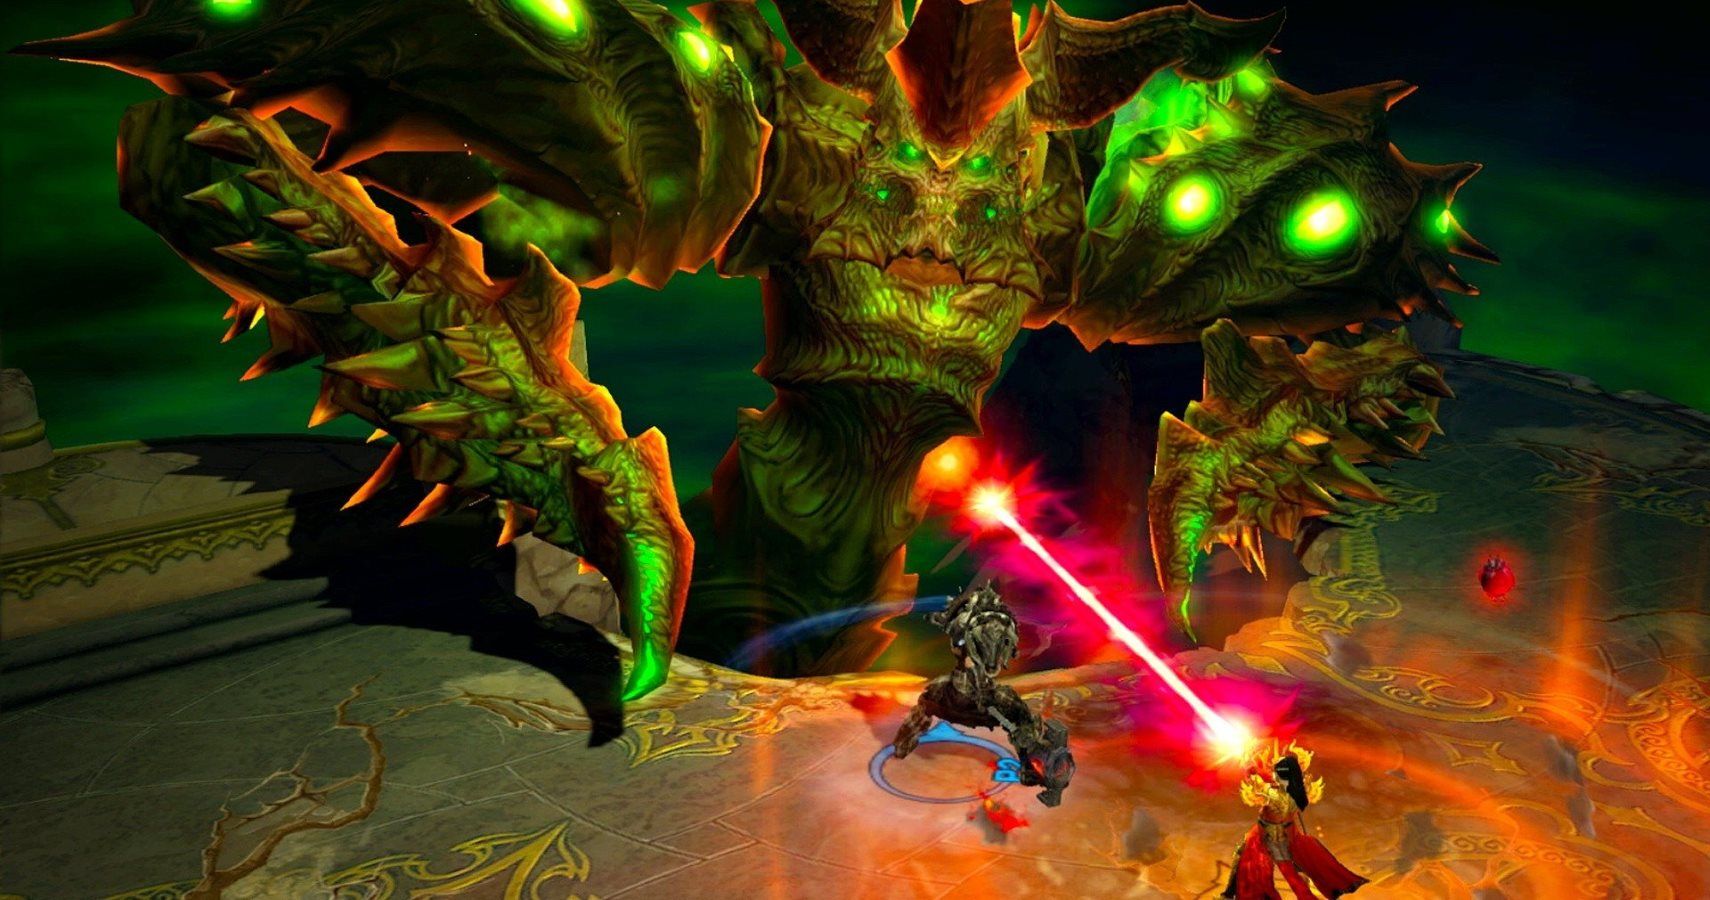 Blizzard Announces Diablo III Cross-Play Is In The Works